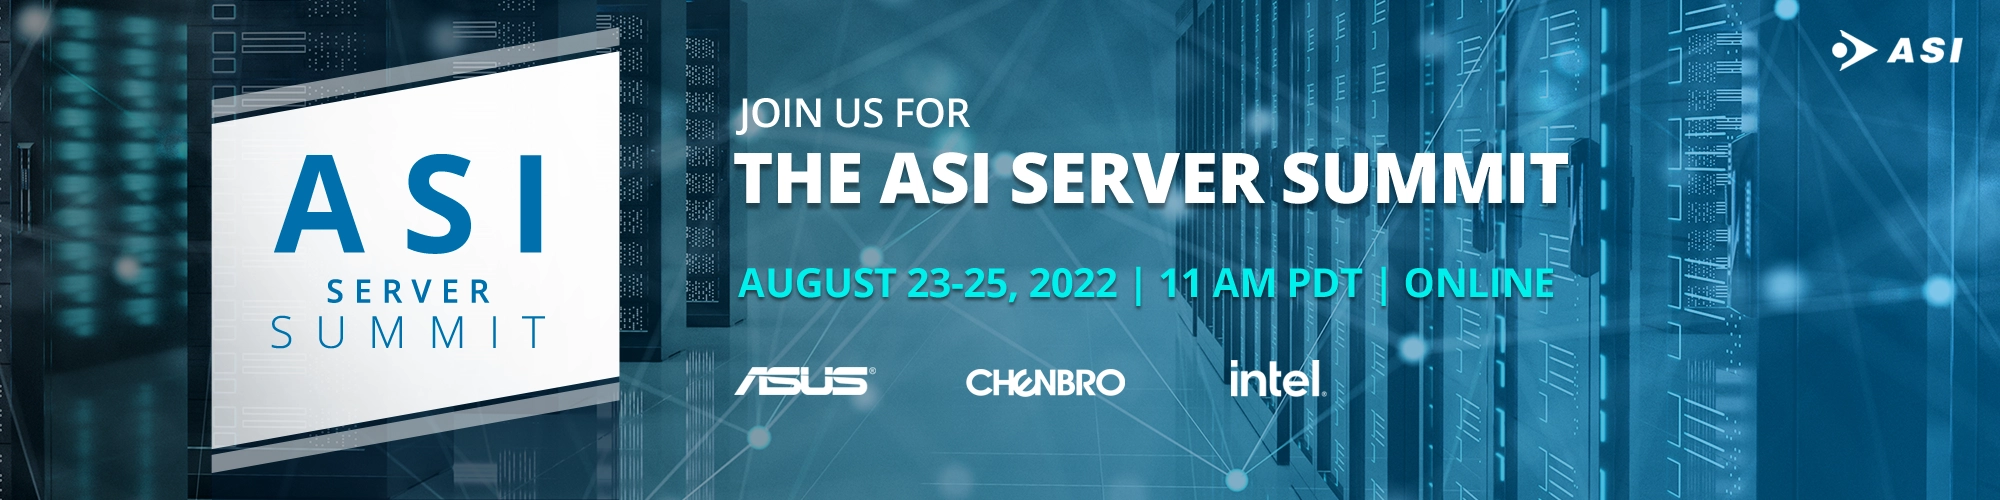 ASI Server Summit